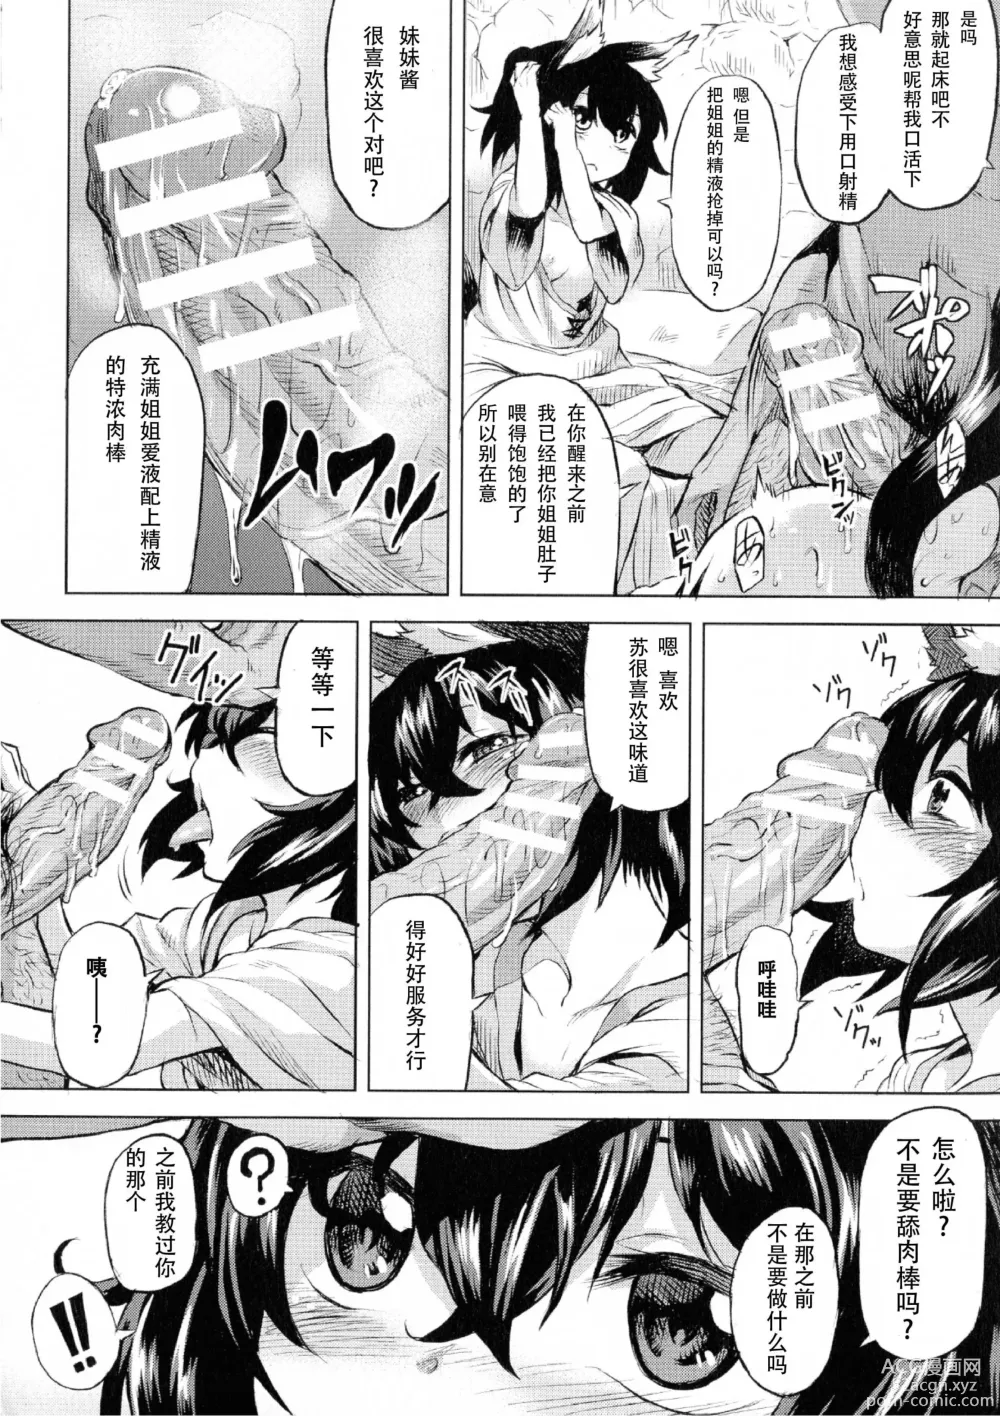 Page 171 of manga Ishu Kitan